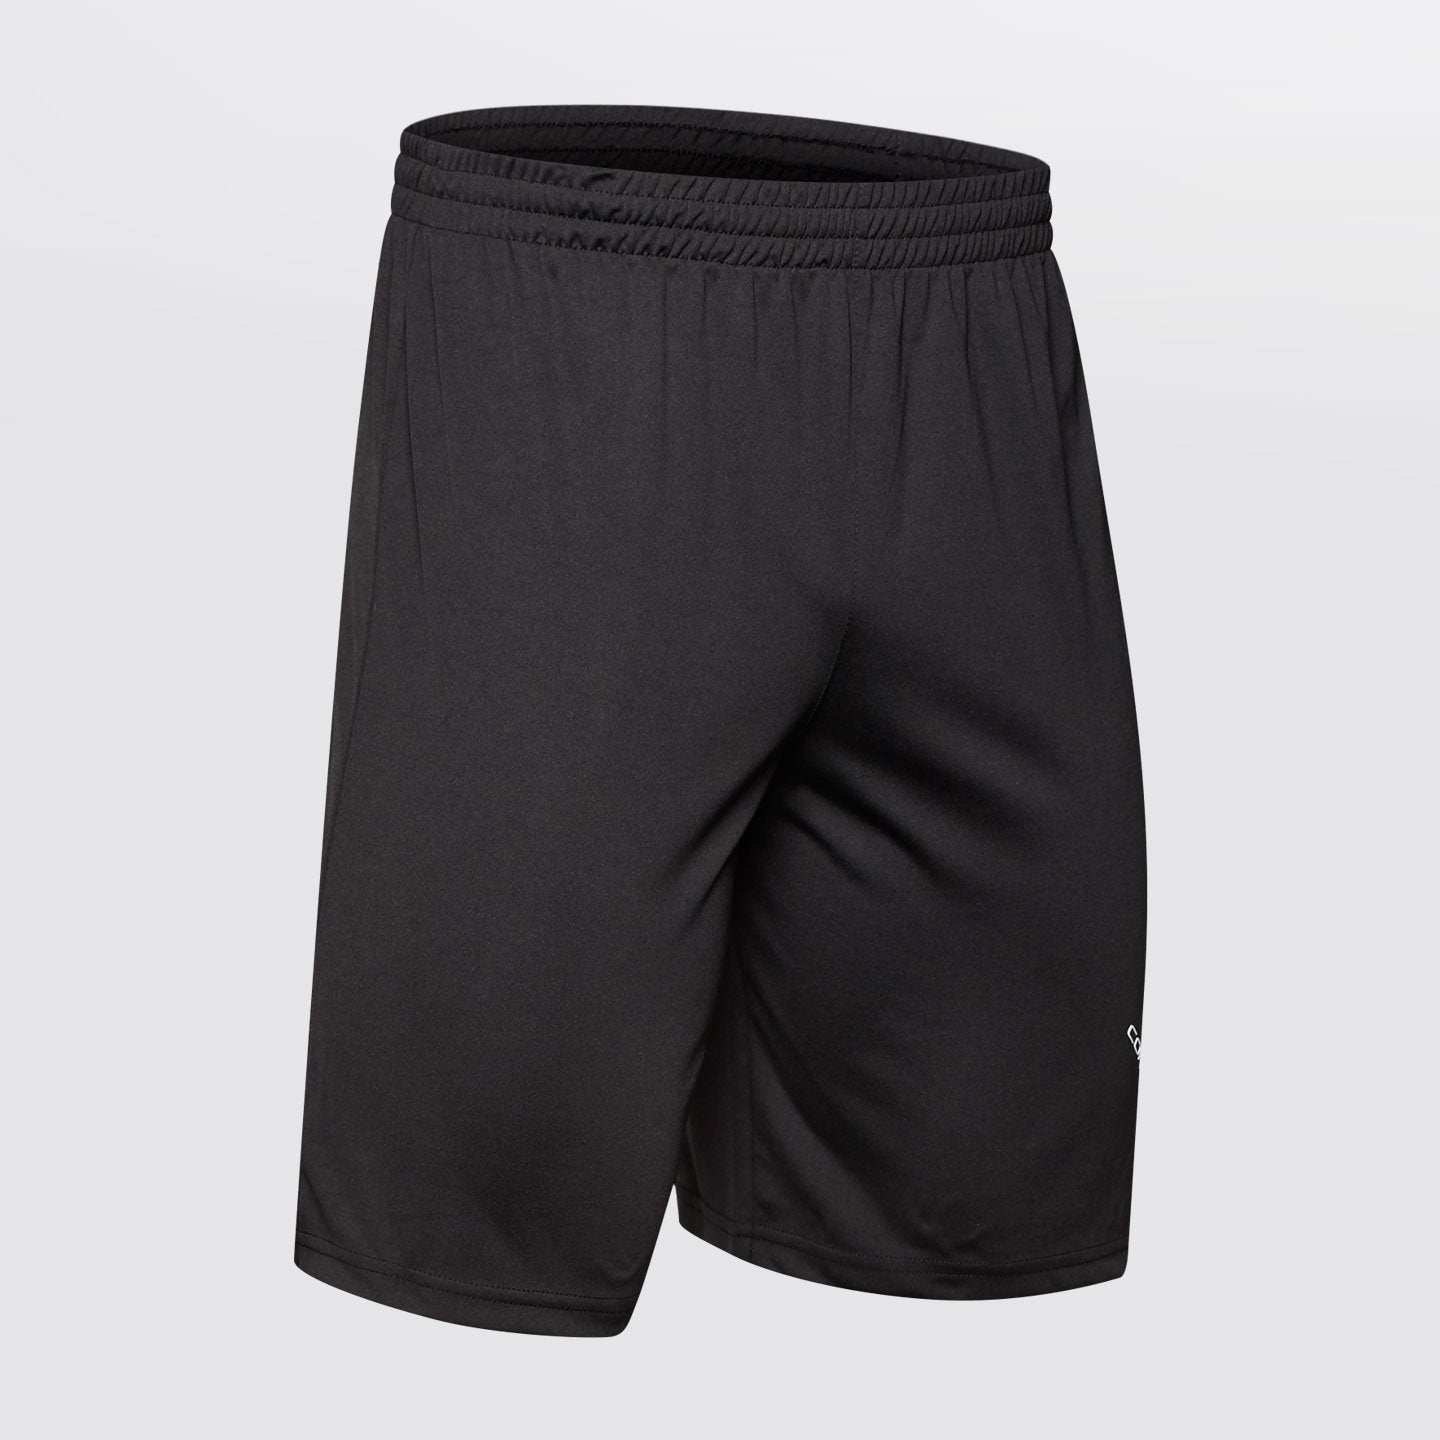 Concave Performance Shorts - Black/White